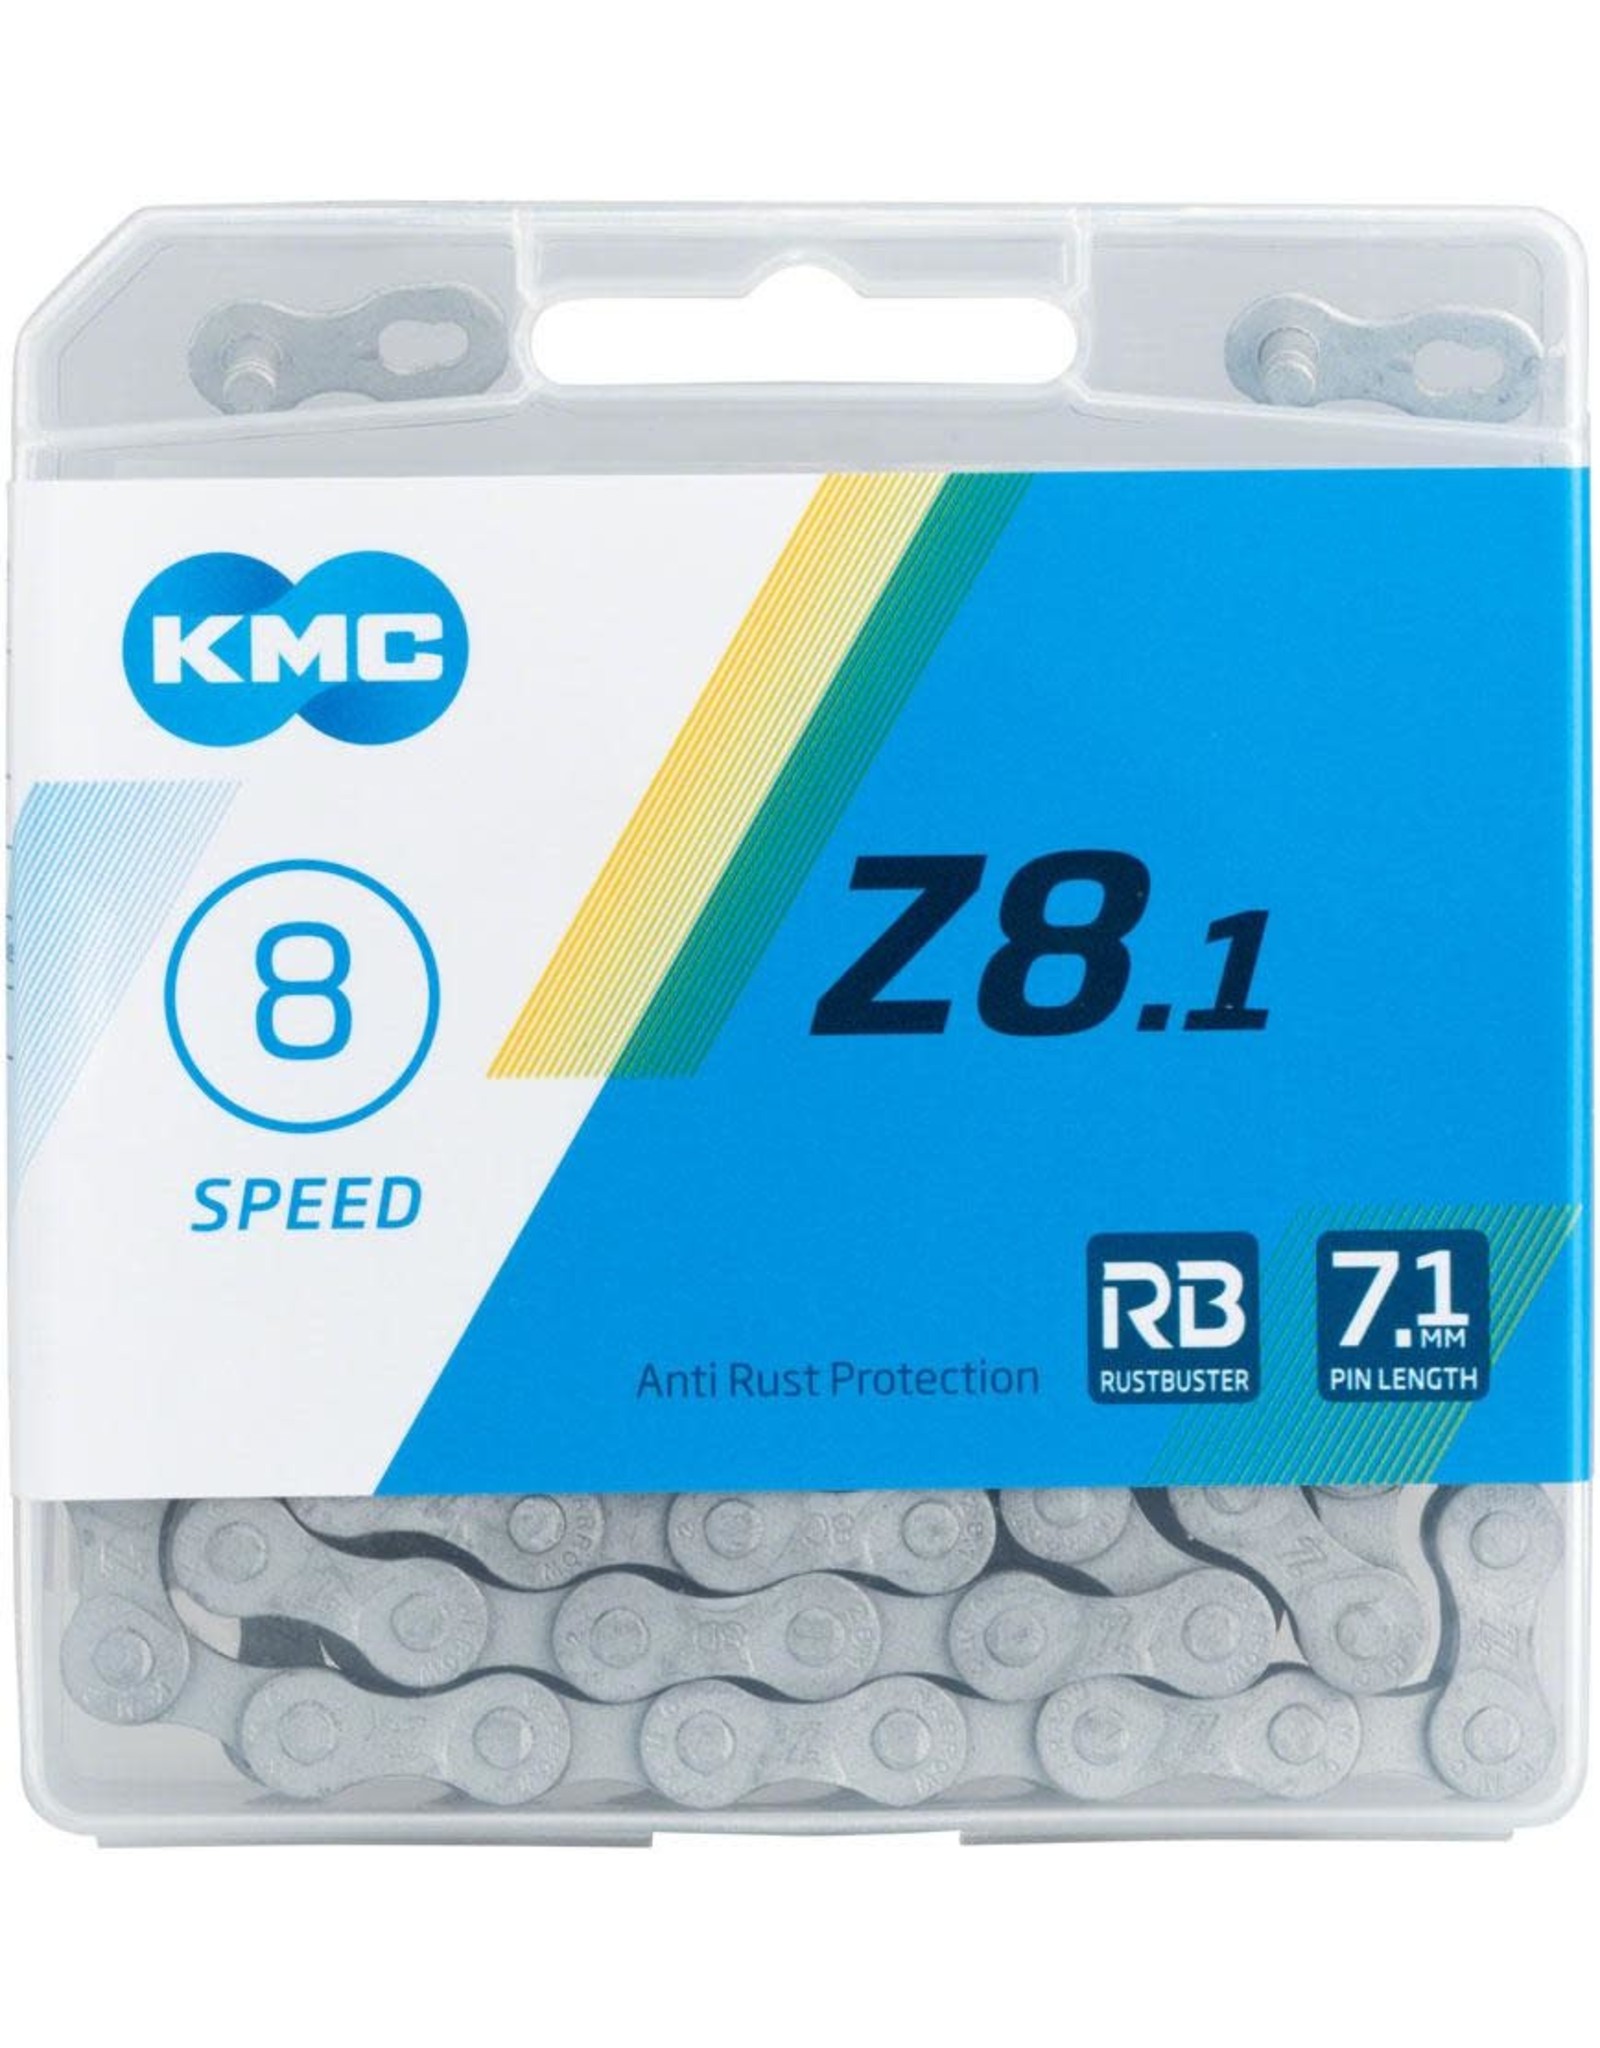 KMC KMC Z8.1 RB Rust Buster 7/8 speed